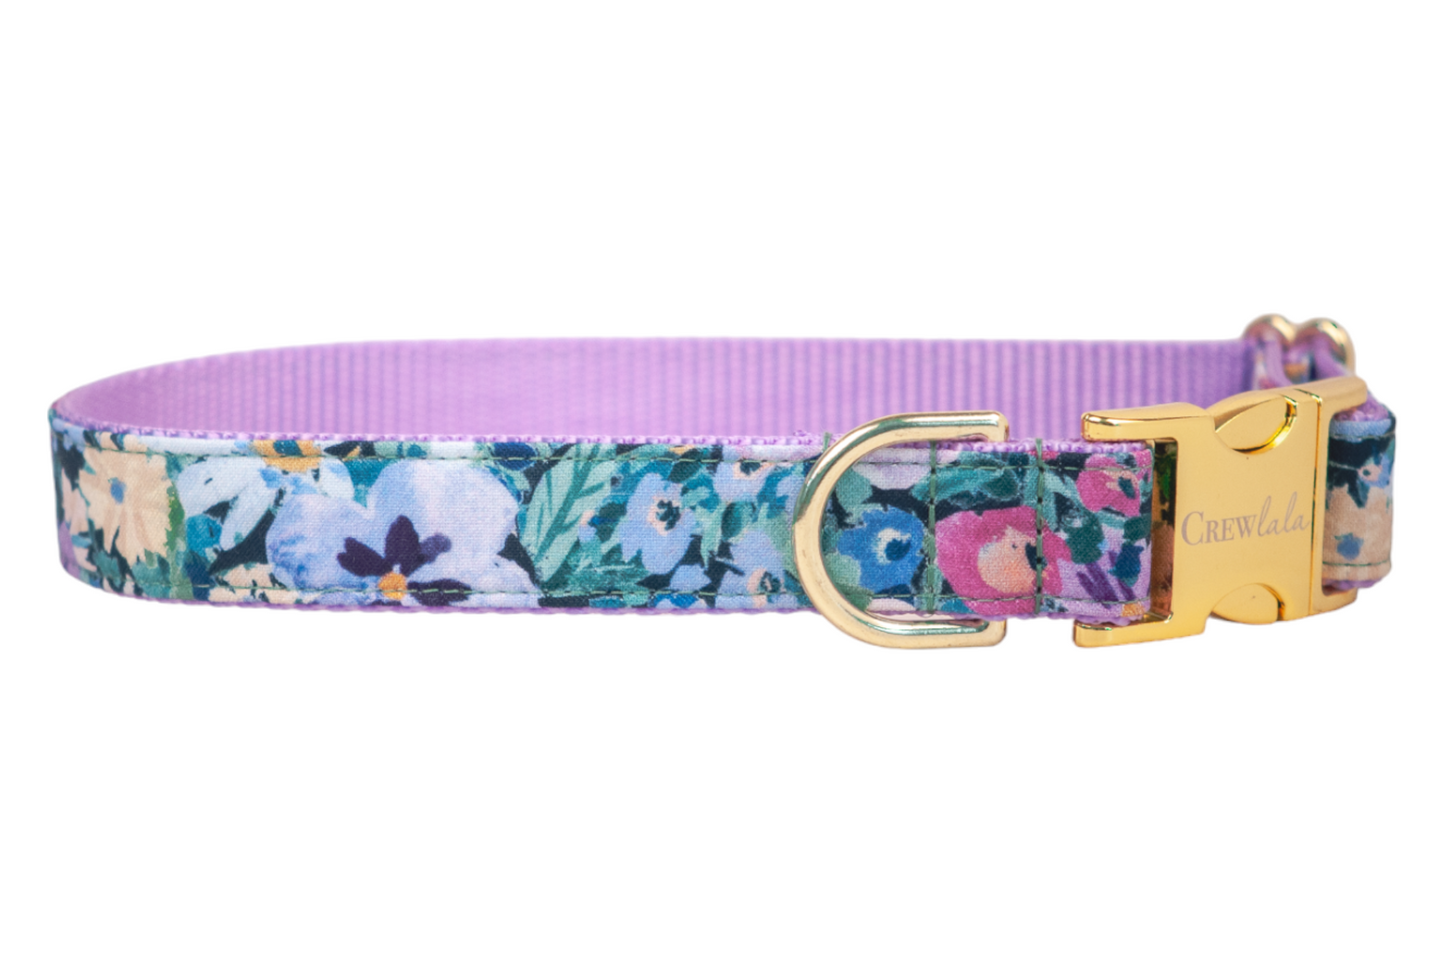 Purple Pansies Bow Tie Dog Collar - Crew LaLa